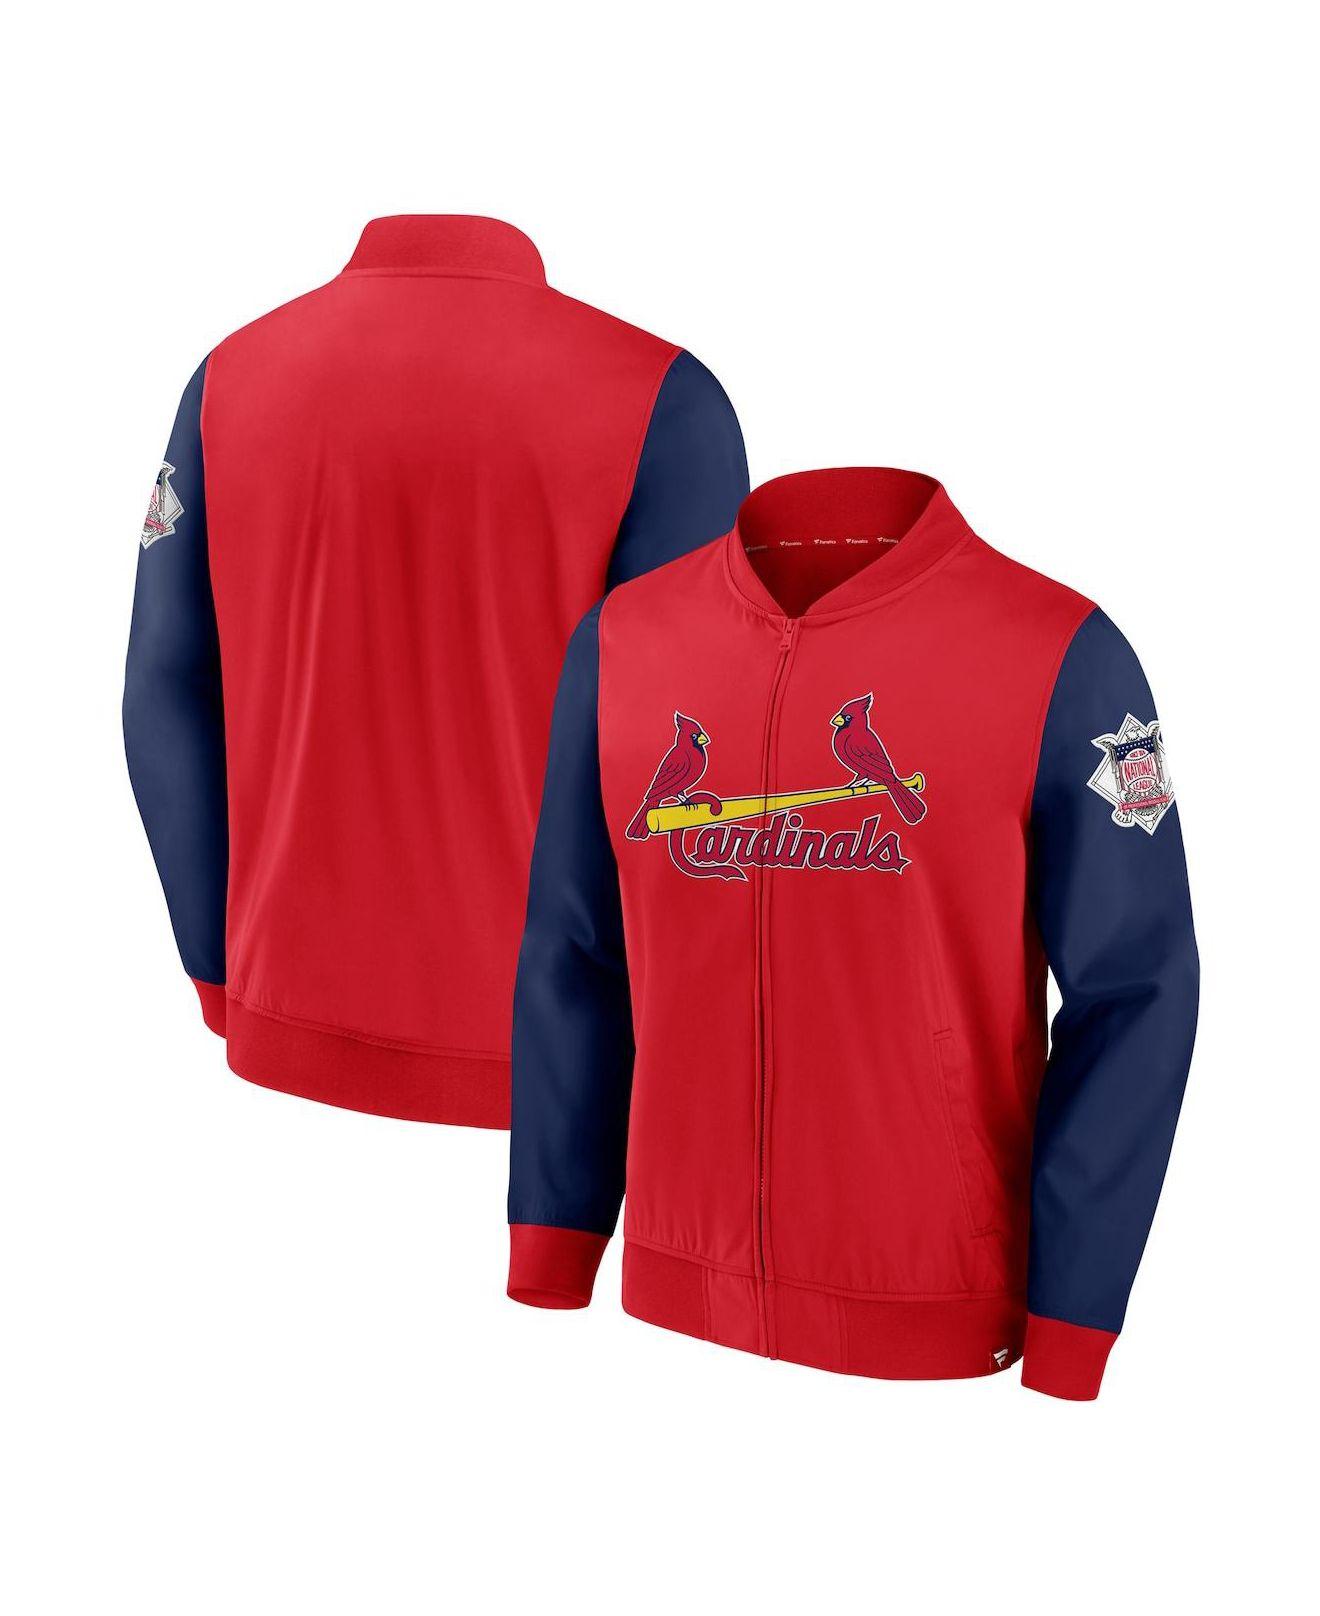 Men's St. Louis Cardinals Fanatics Branded Heathered Gray/Navy